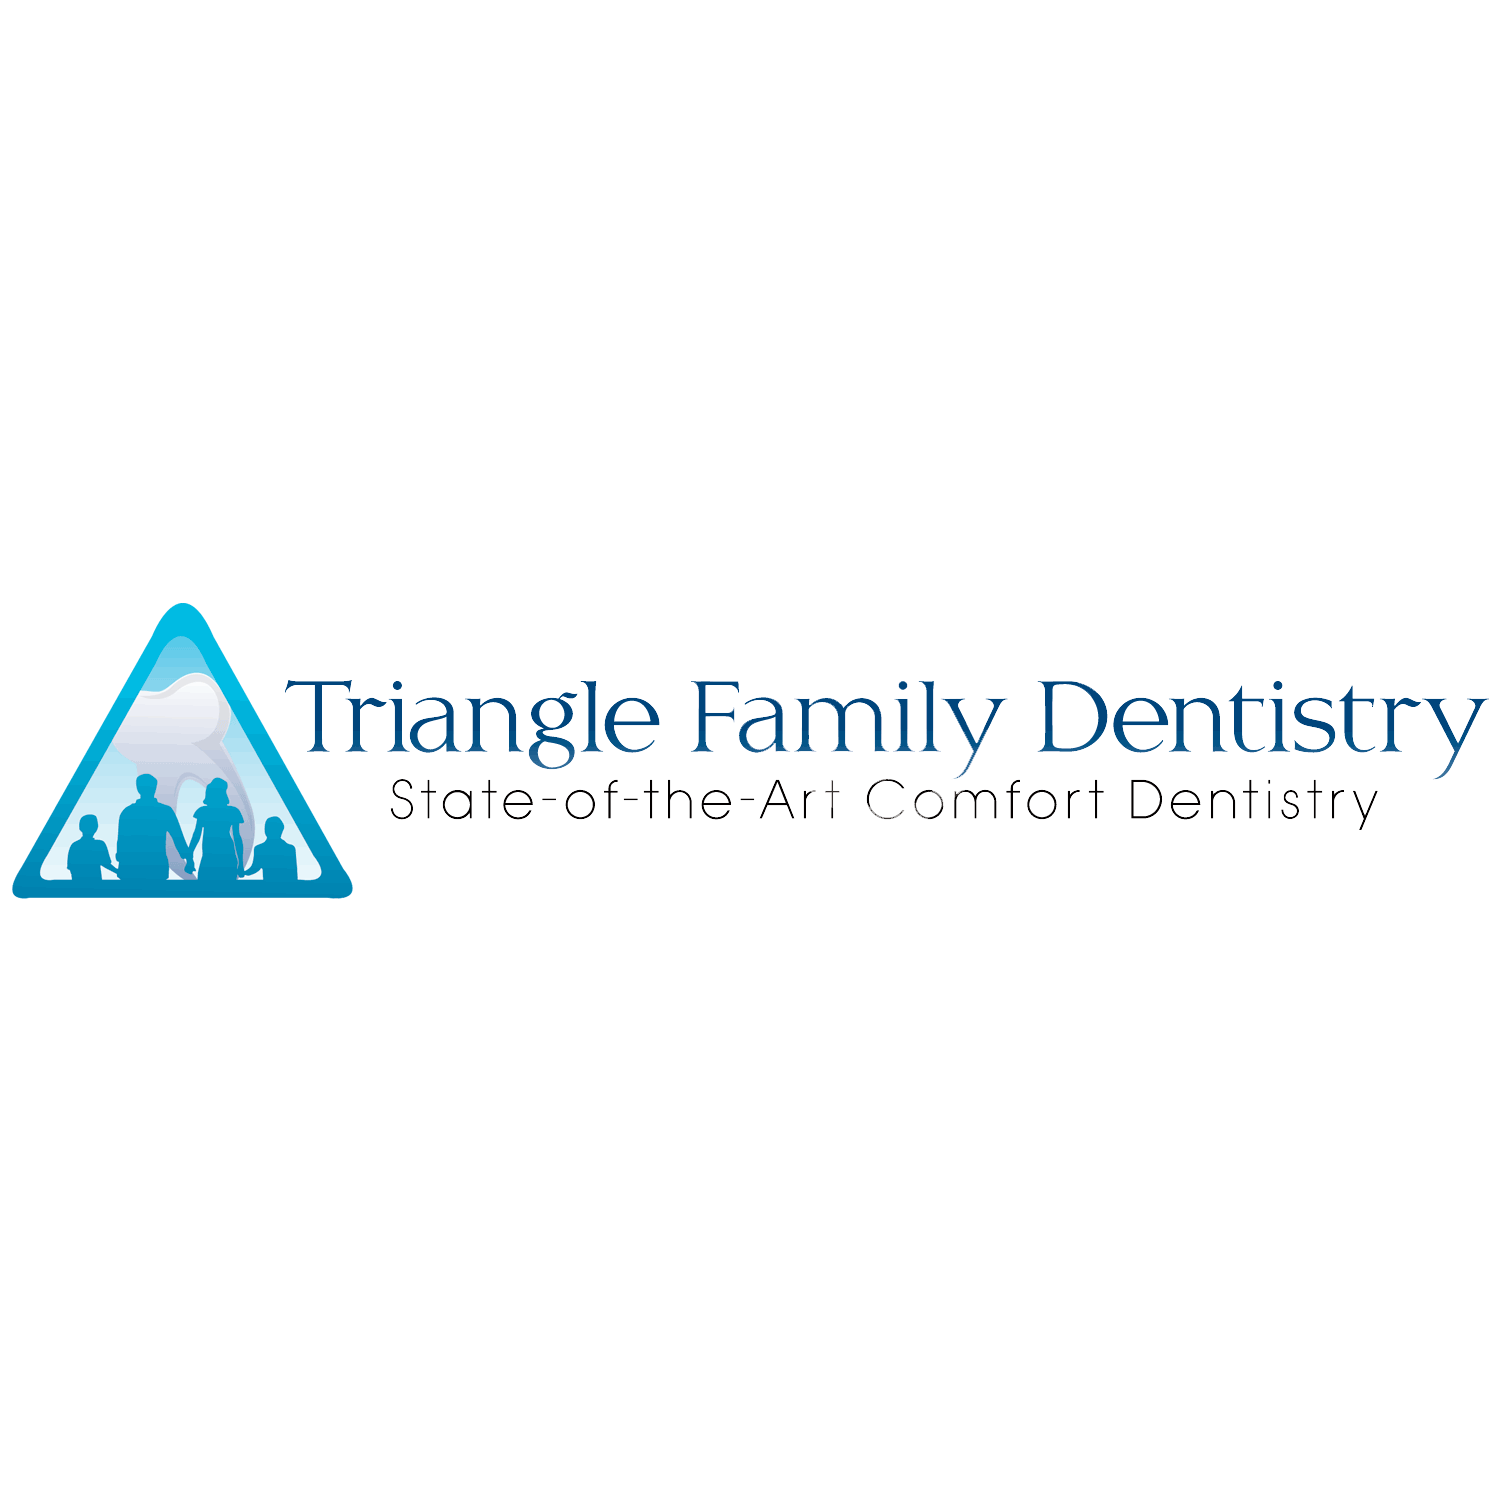 Sponsor Triangle Family Dentistry